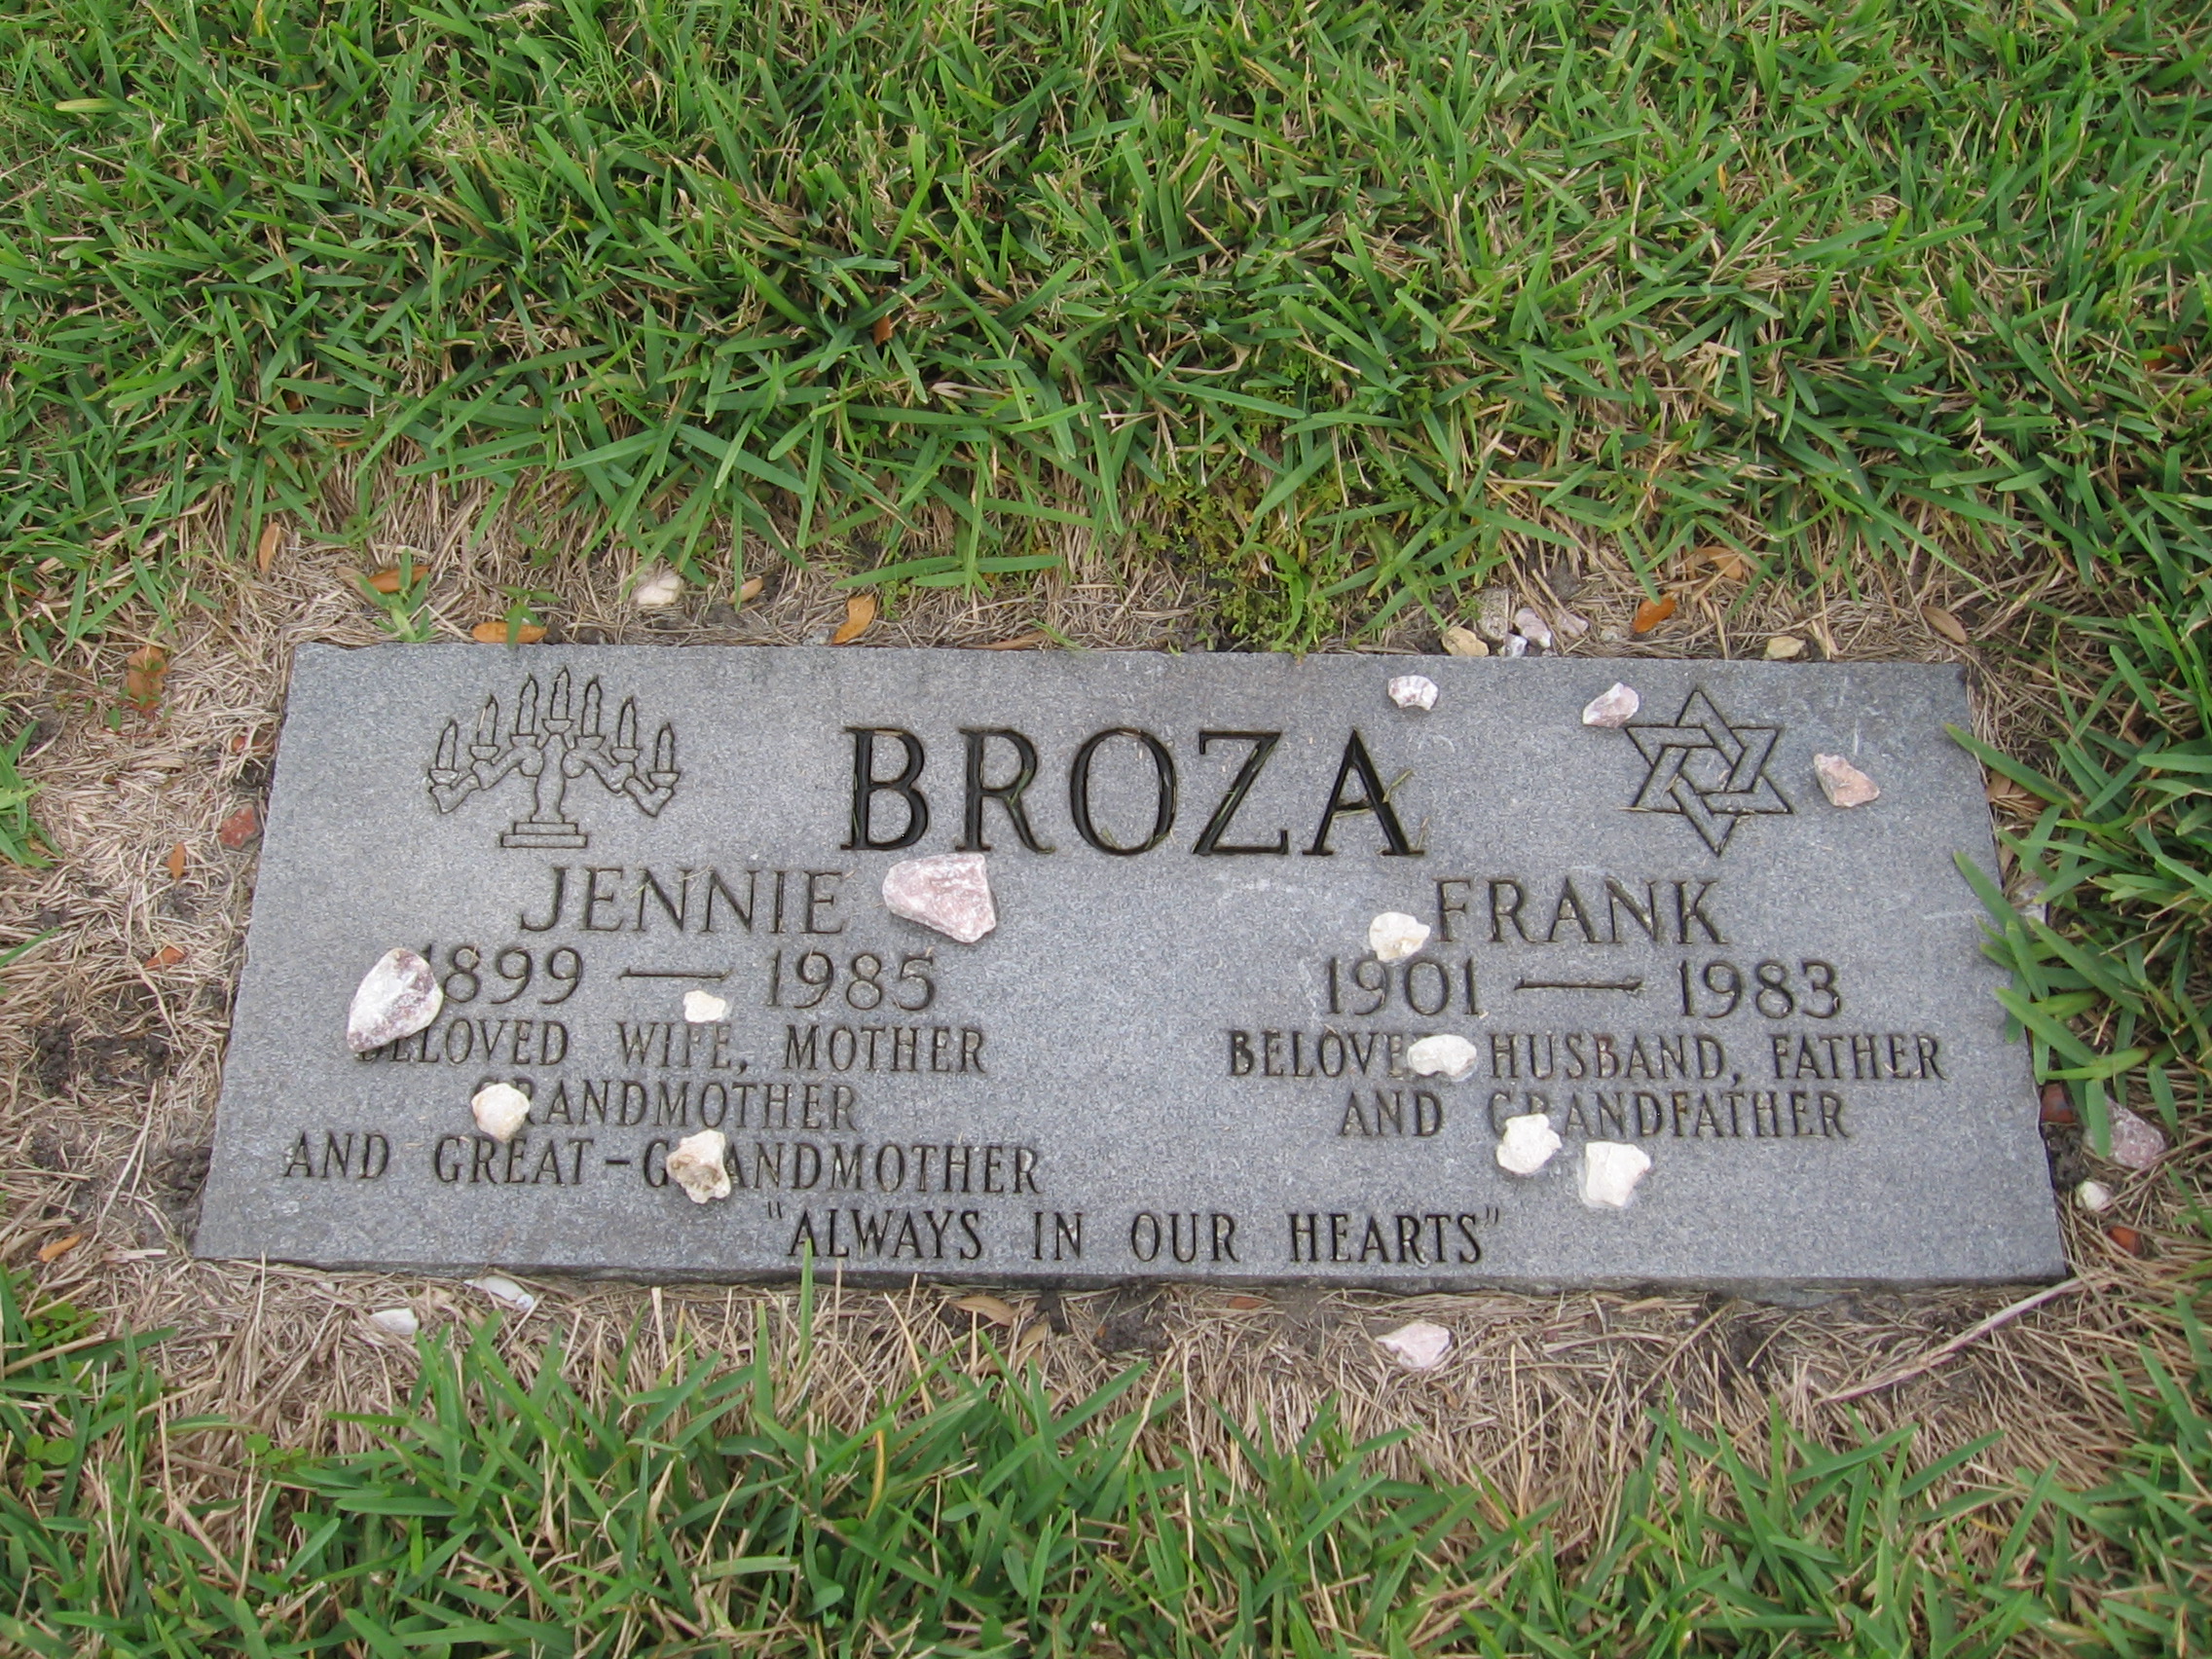 Jennie Broza